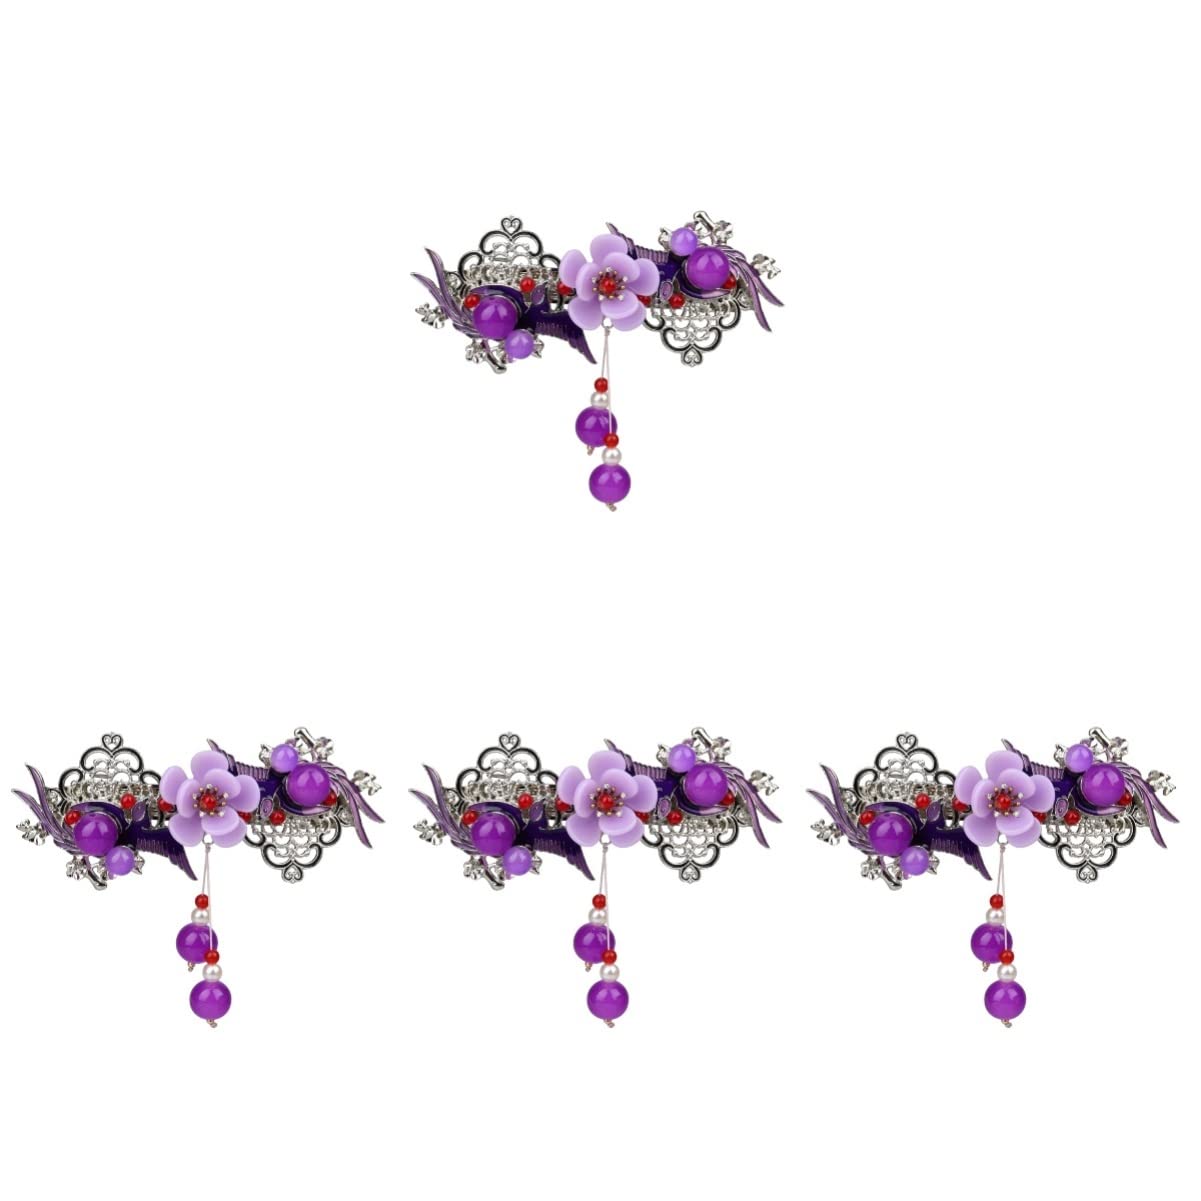 SHUBIAO 6 Stück Vintage Dekorative Blume Blume Haarspangen for Frauen Dekorative Haarspangen Haarschmuck for Frauen Haarspange Quaste Haarspangen (Color : Purplex5pcs, Size : 8.6X3.8X2.5CMx7pcs)